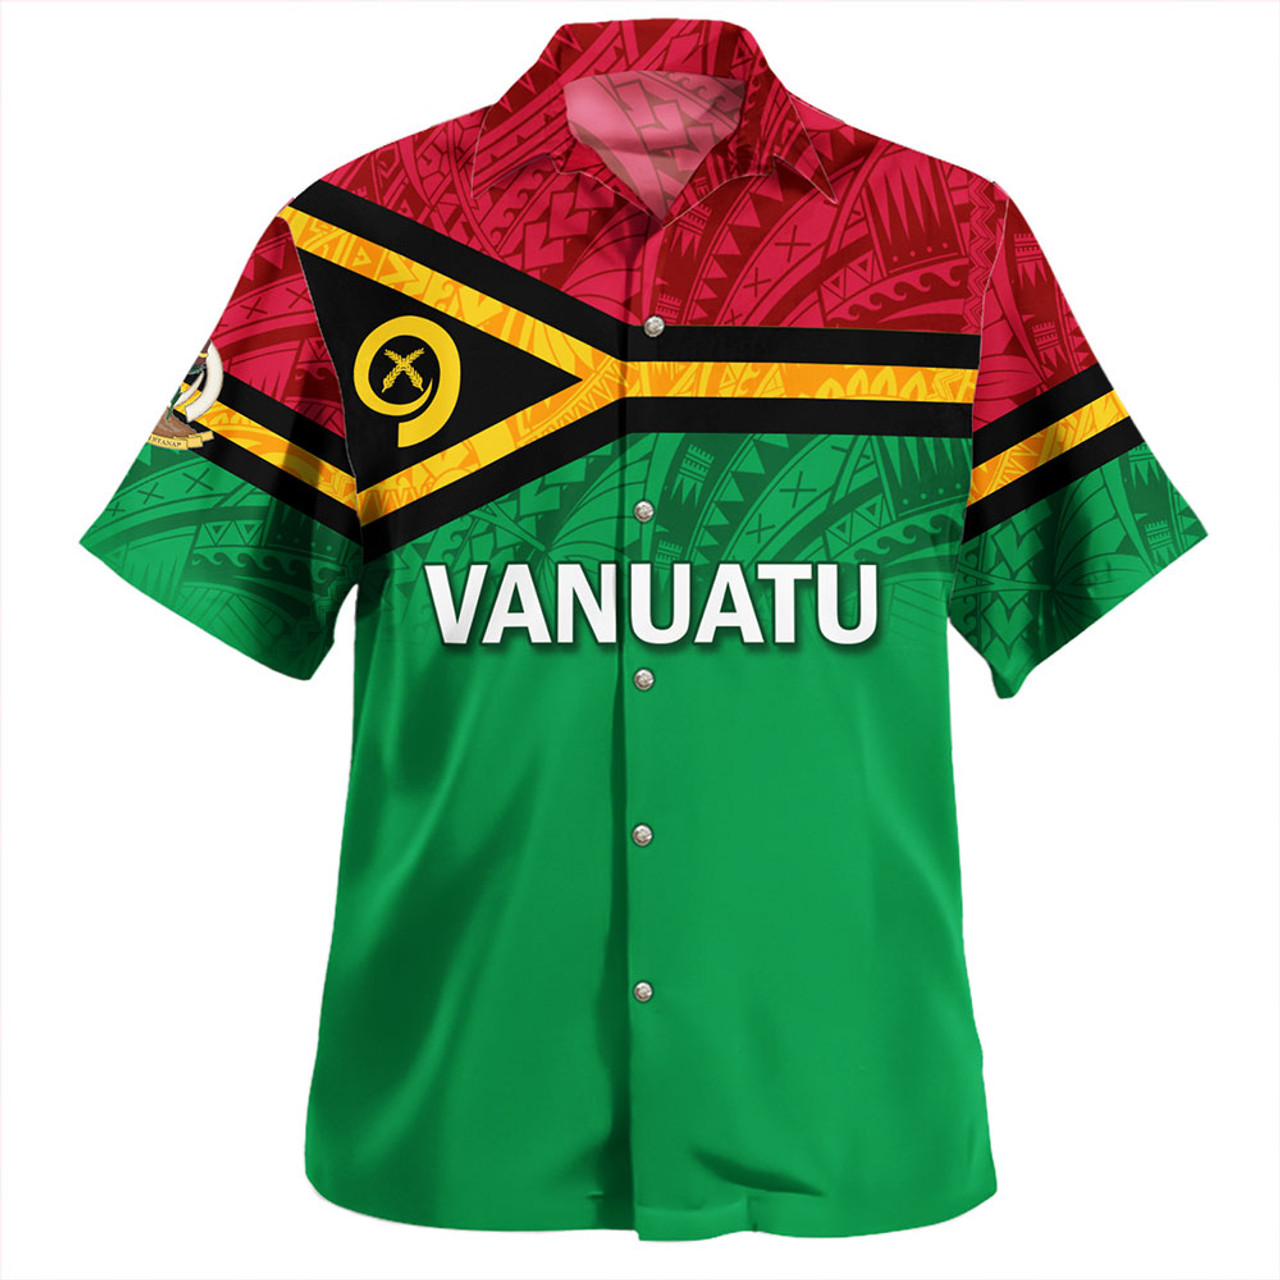 Vanuatu Hawaiian Shirt - Flag Color With Traditional Patterns